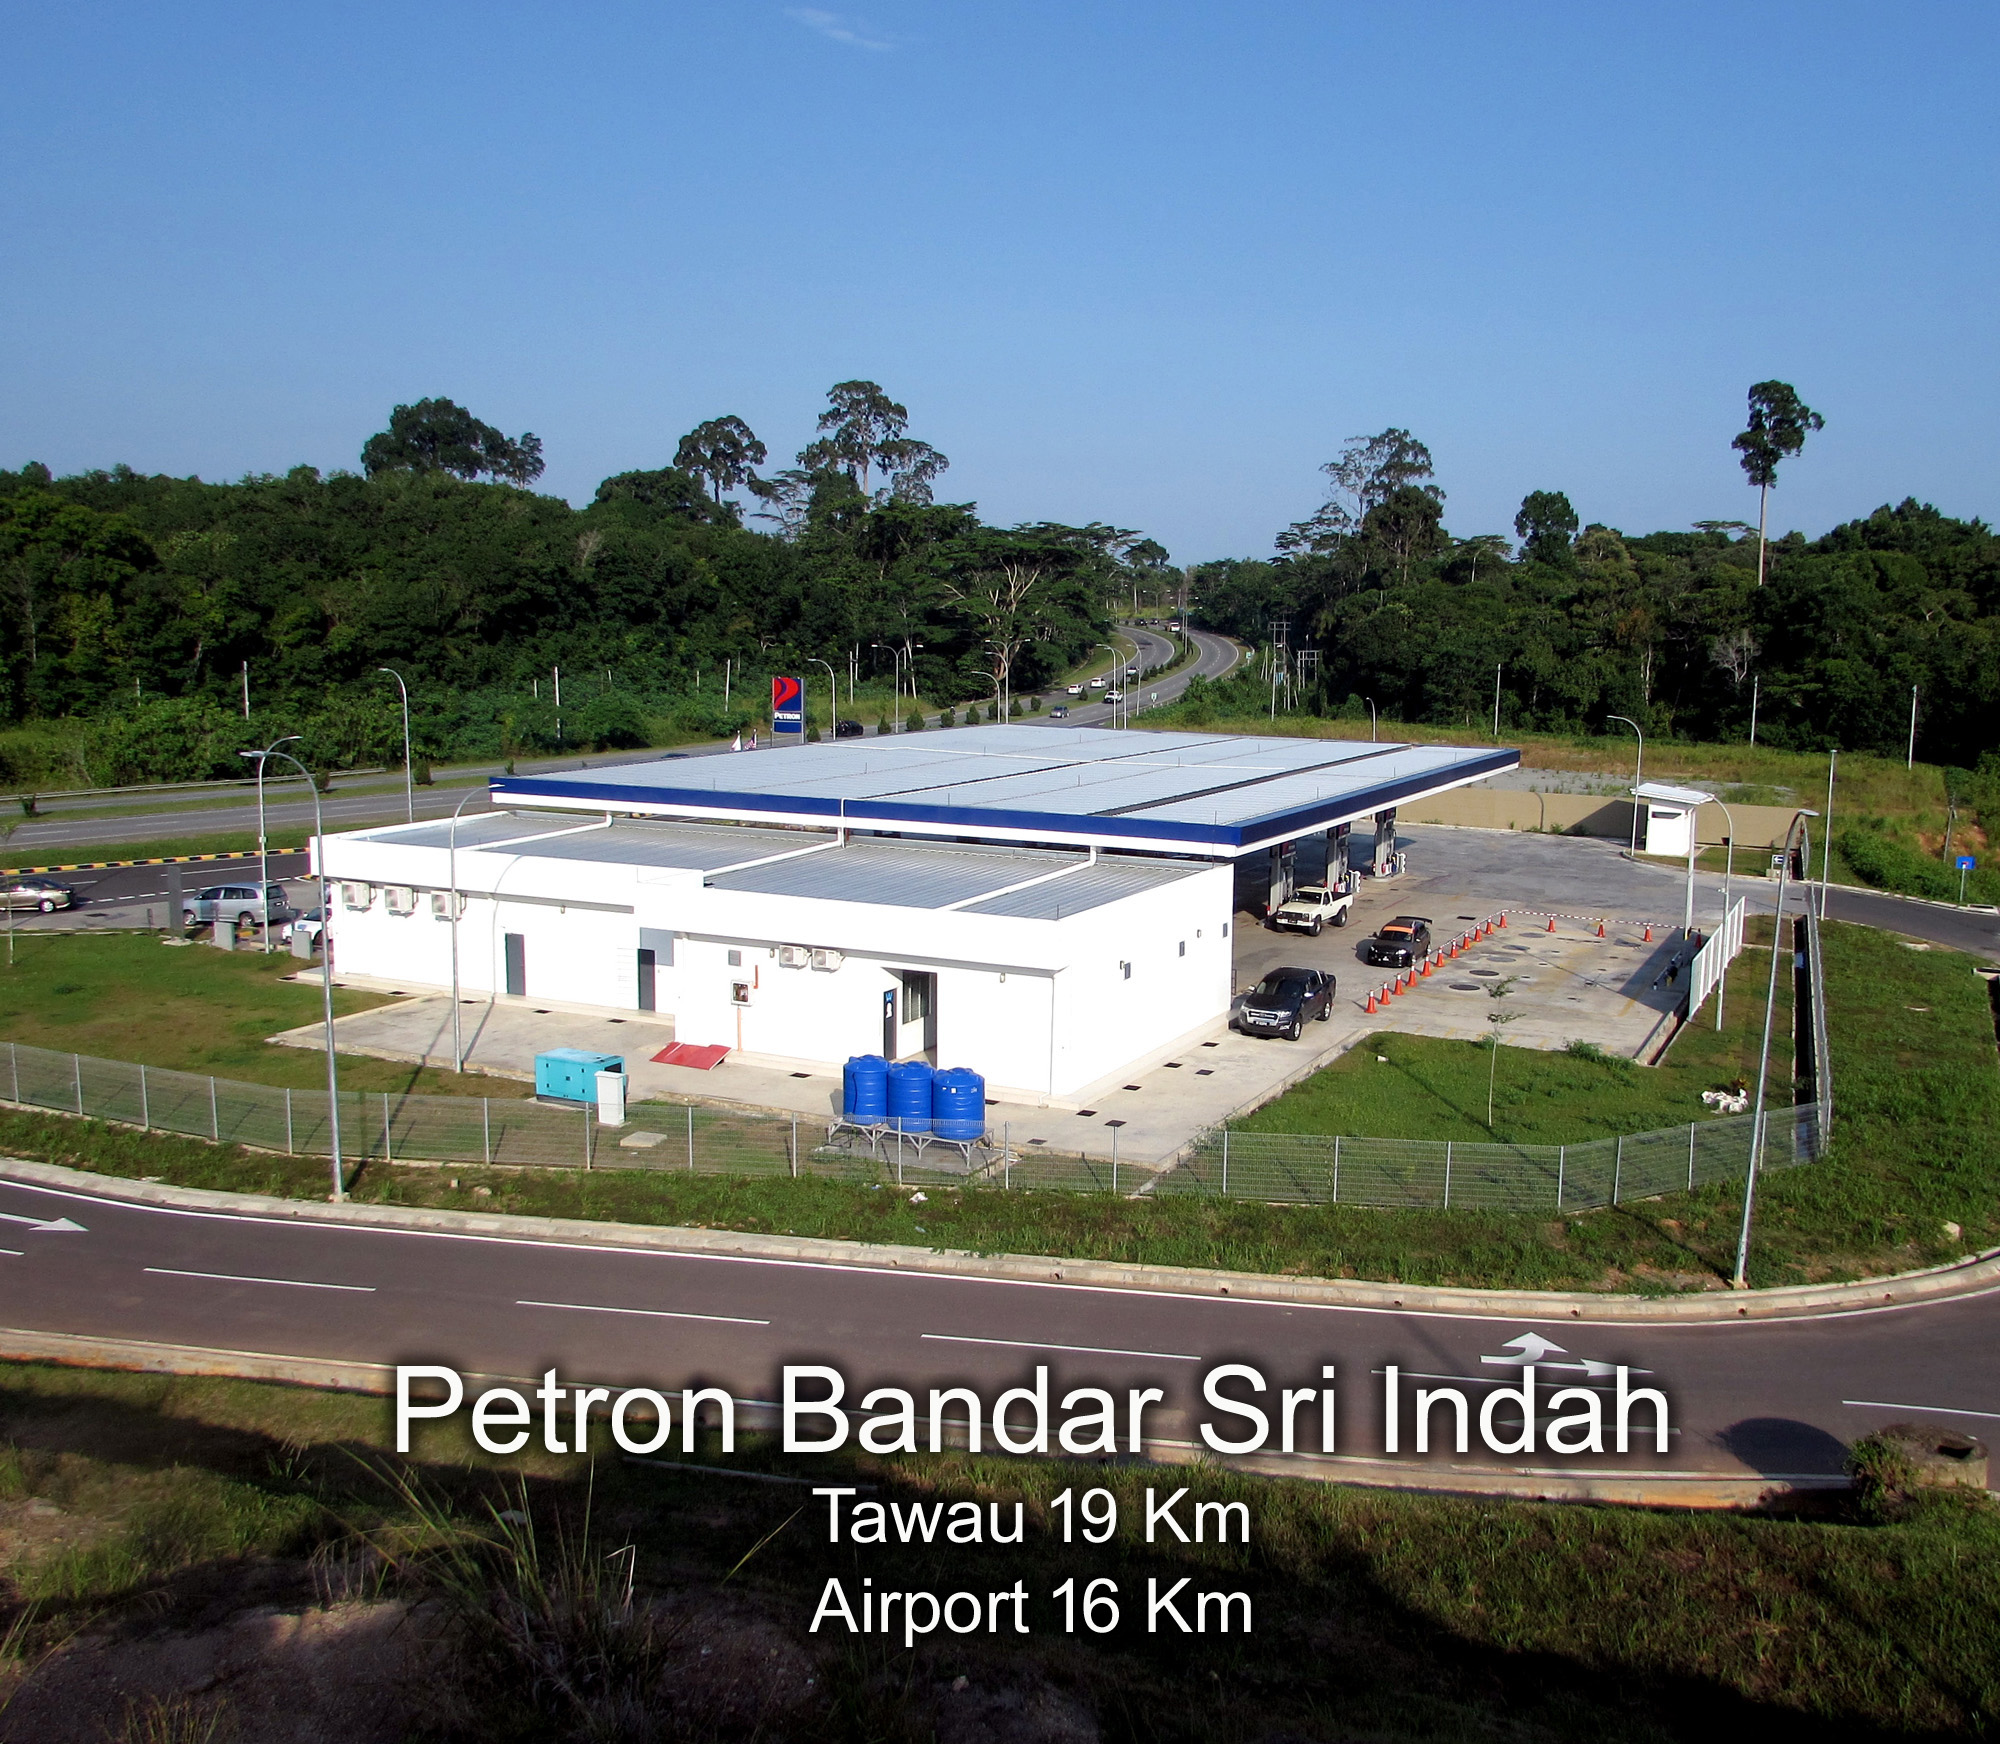 Petron Bandar Sri Indah The biggest petrol station in the Tawau district, commenced operation on September 6, 2019